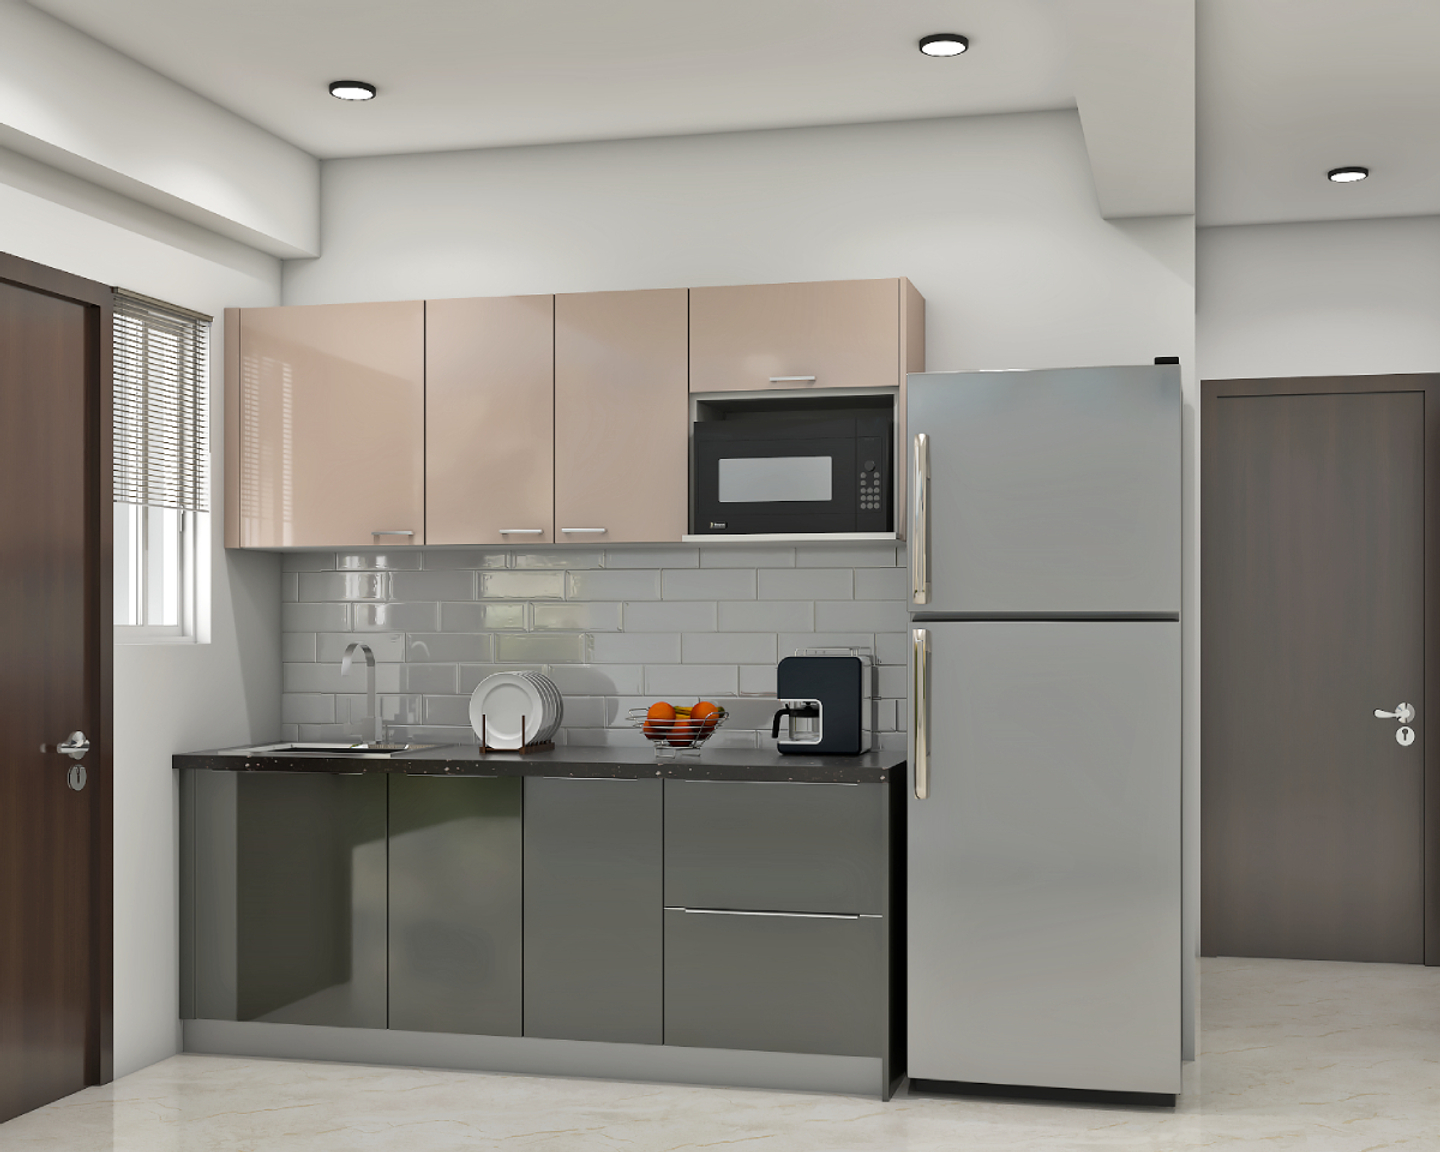 Modern Modular Parallel Kitchen Design With Subway Tiles